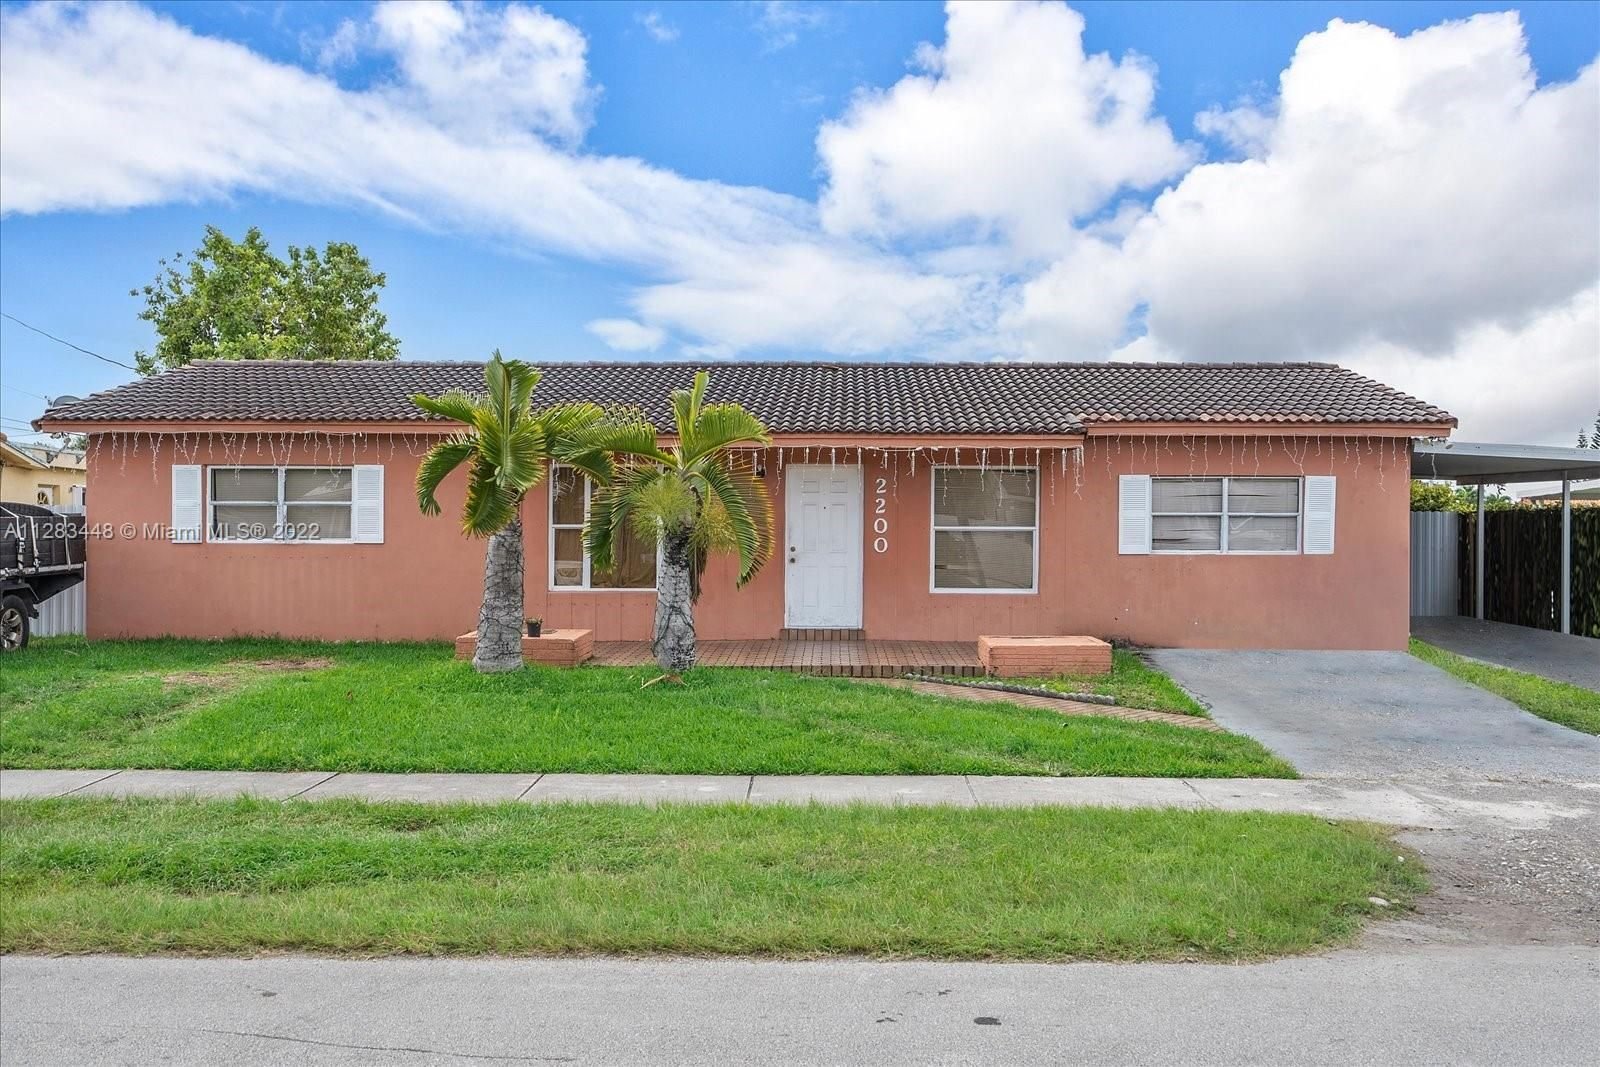 Real estate property located at 2200 127th Ct, Miami-Dade County, Miami, FL